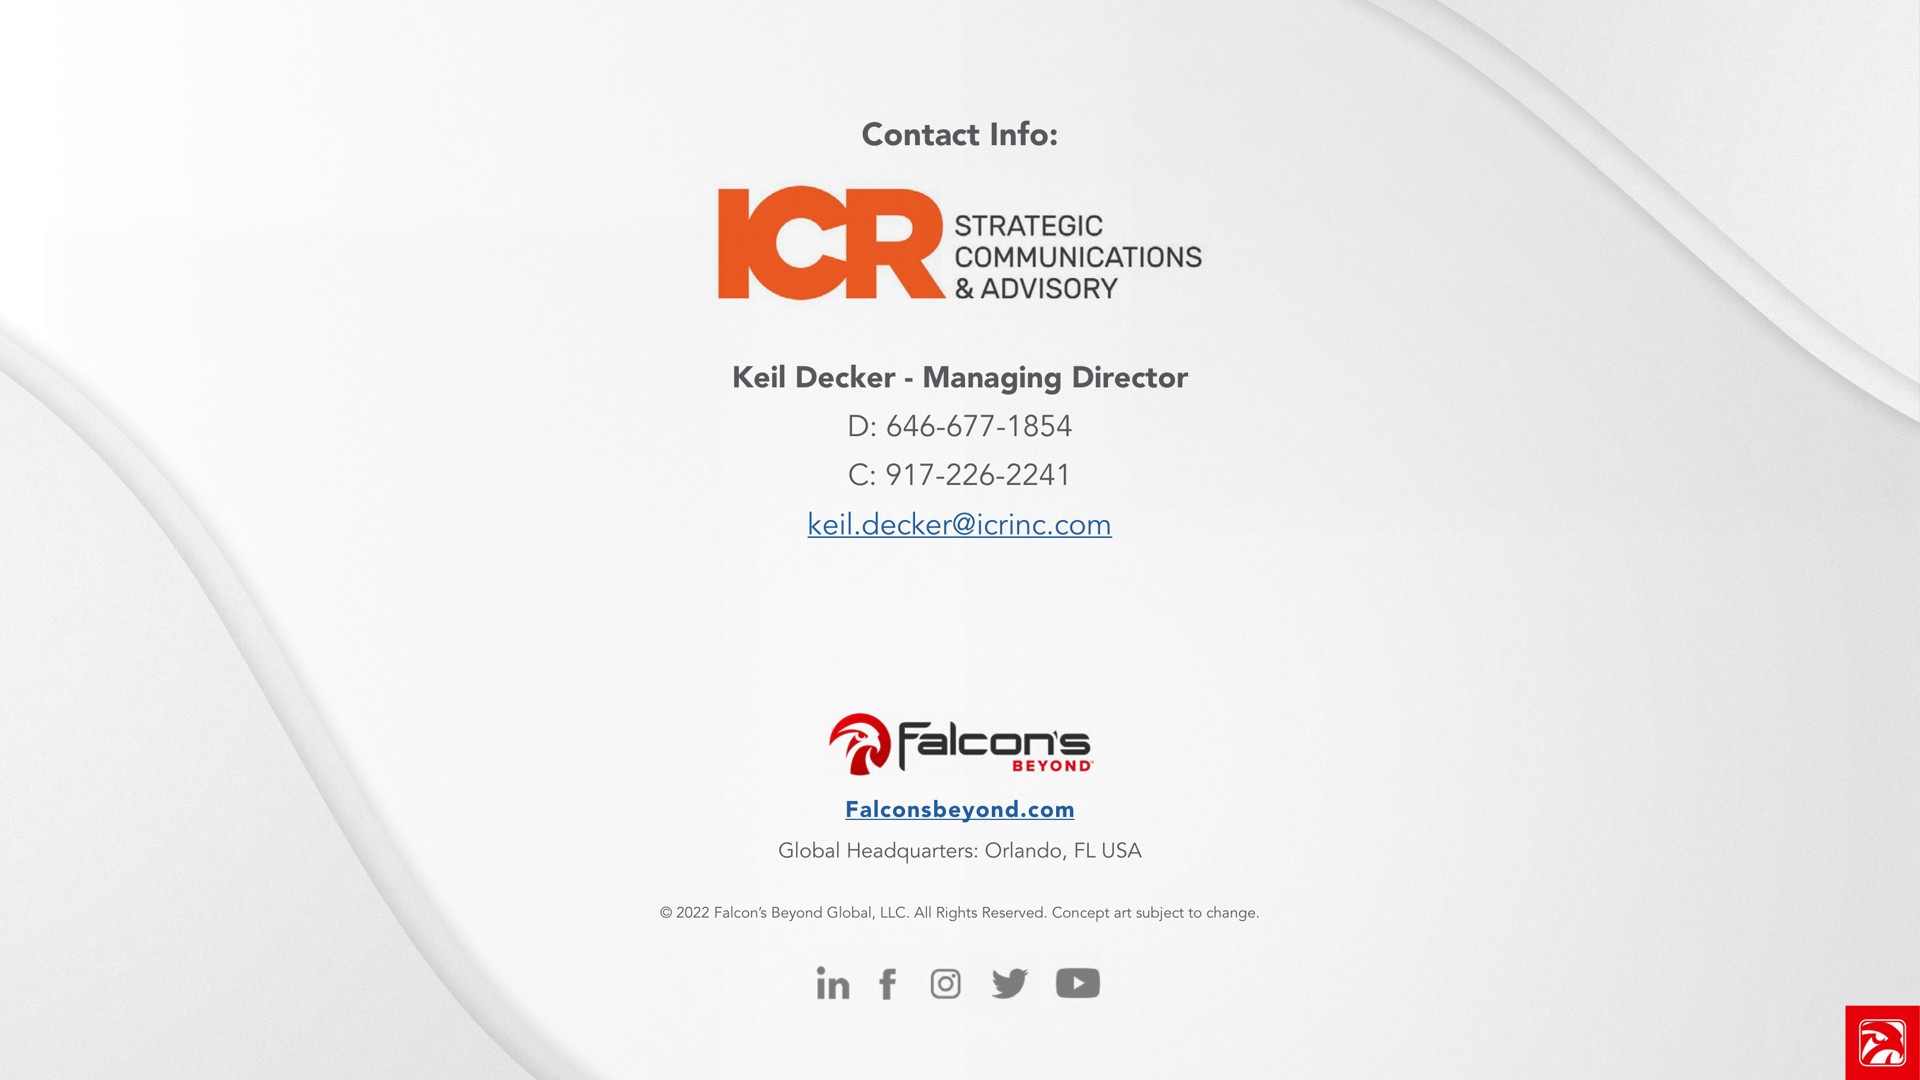 contact decker managing director decker falcons | Falcon's Beyond